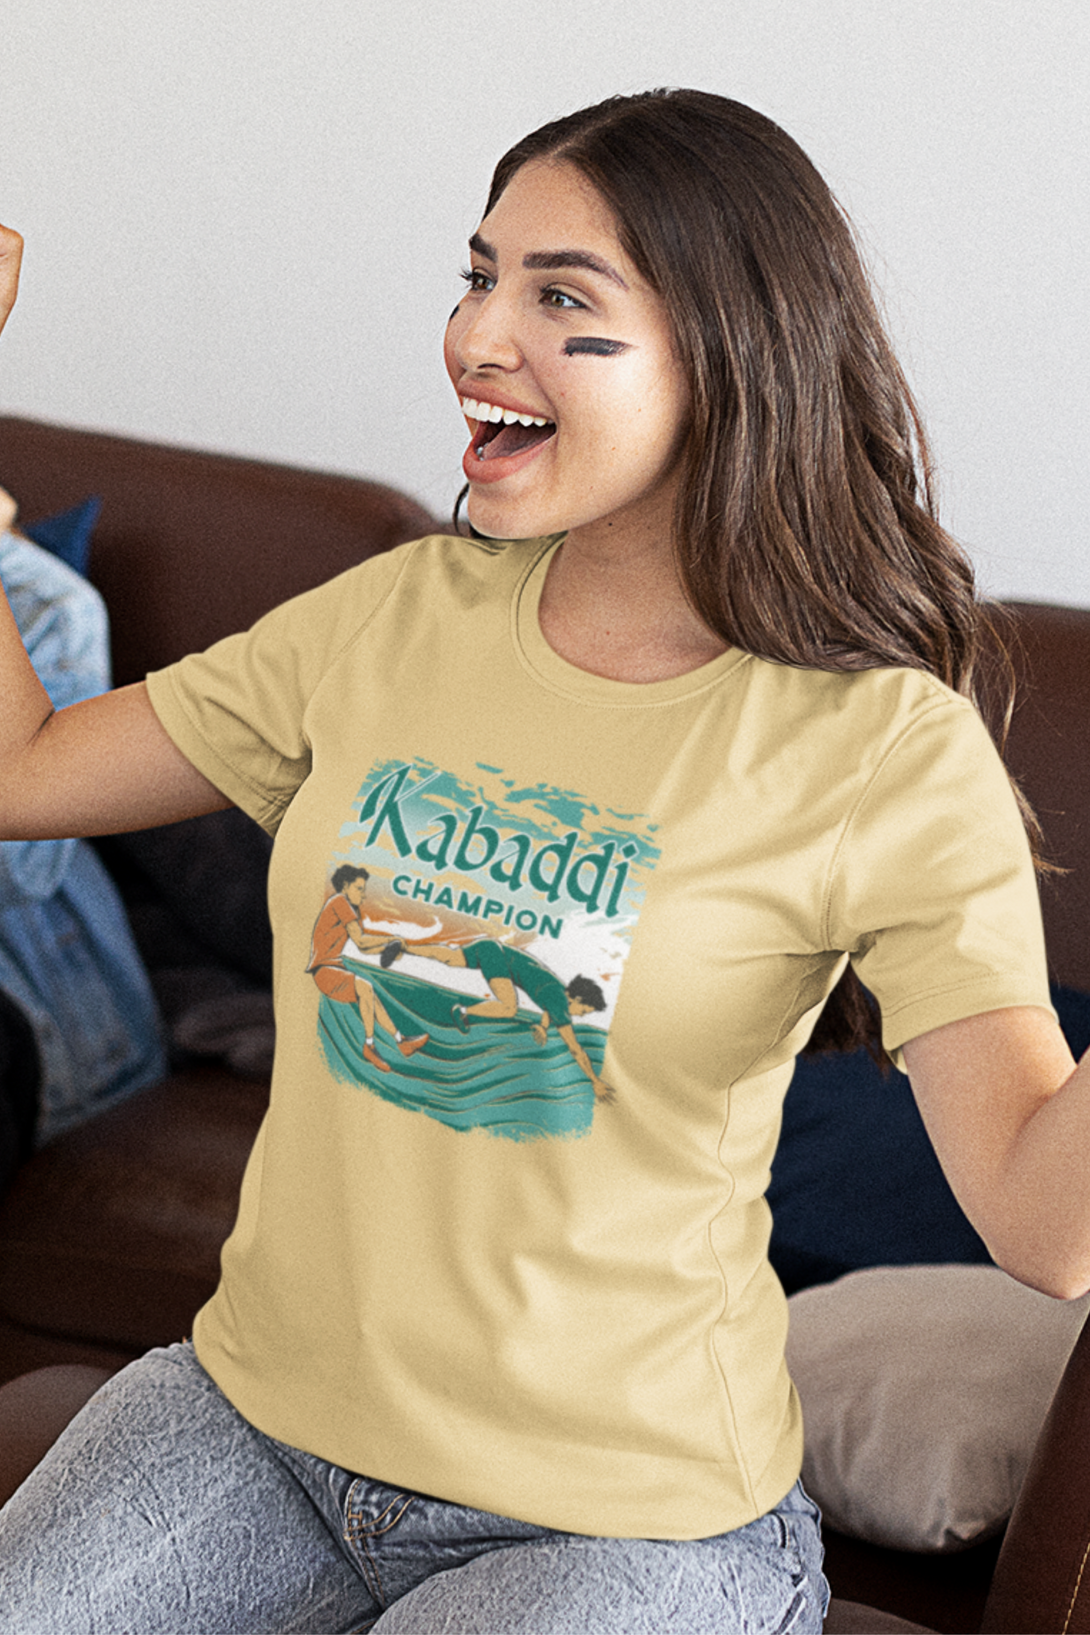 Kabaddi Champion Printed T-Shirt For Women - WowWaves